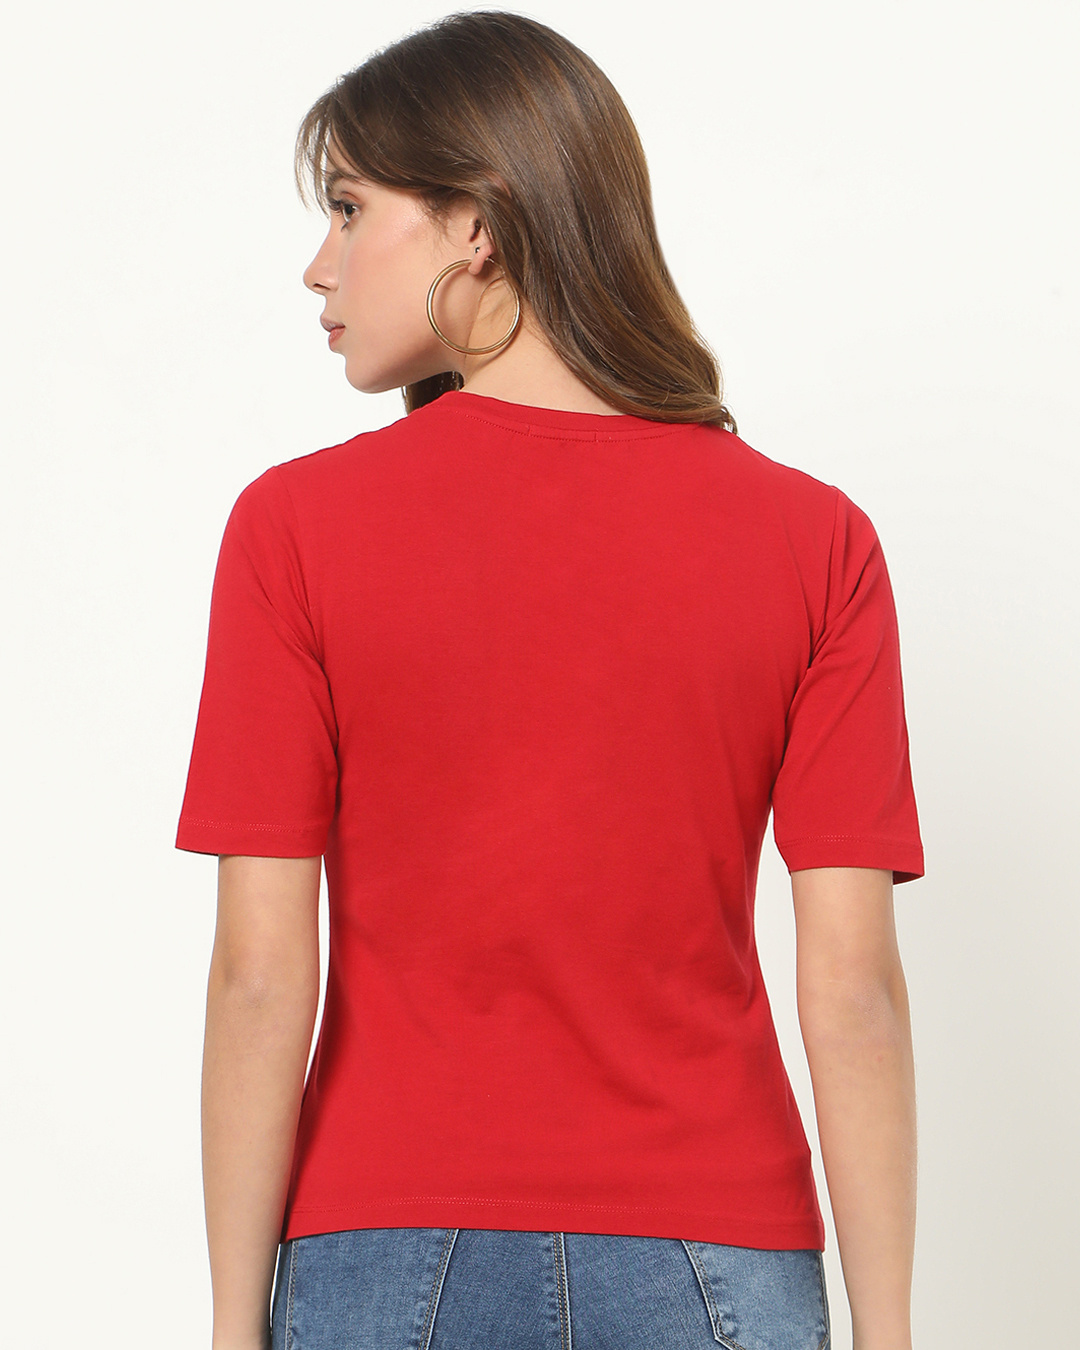 Shop Climbing pocket panda Women's Elbow Sleeve Round Neck T-shirt-Back